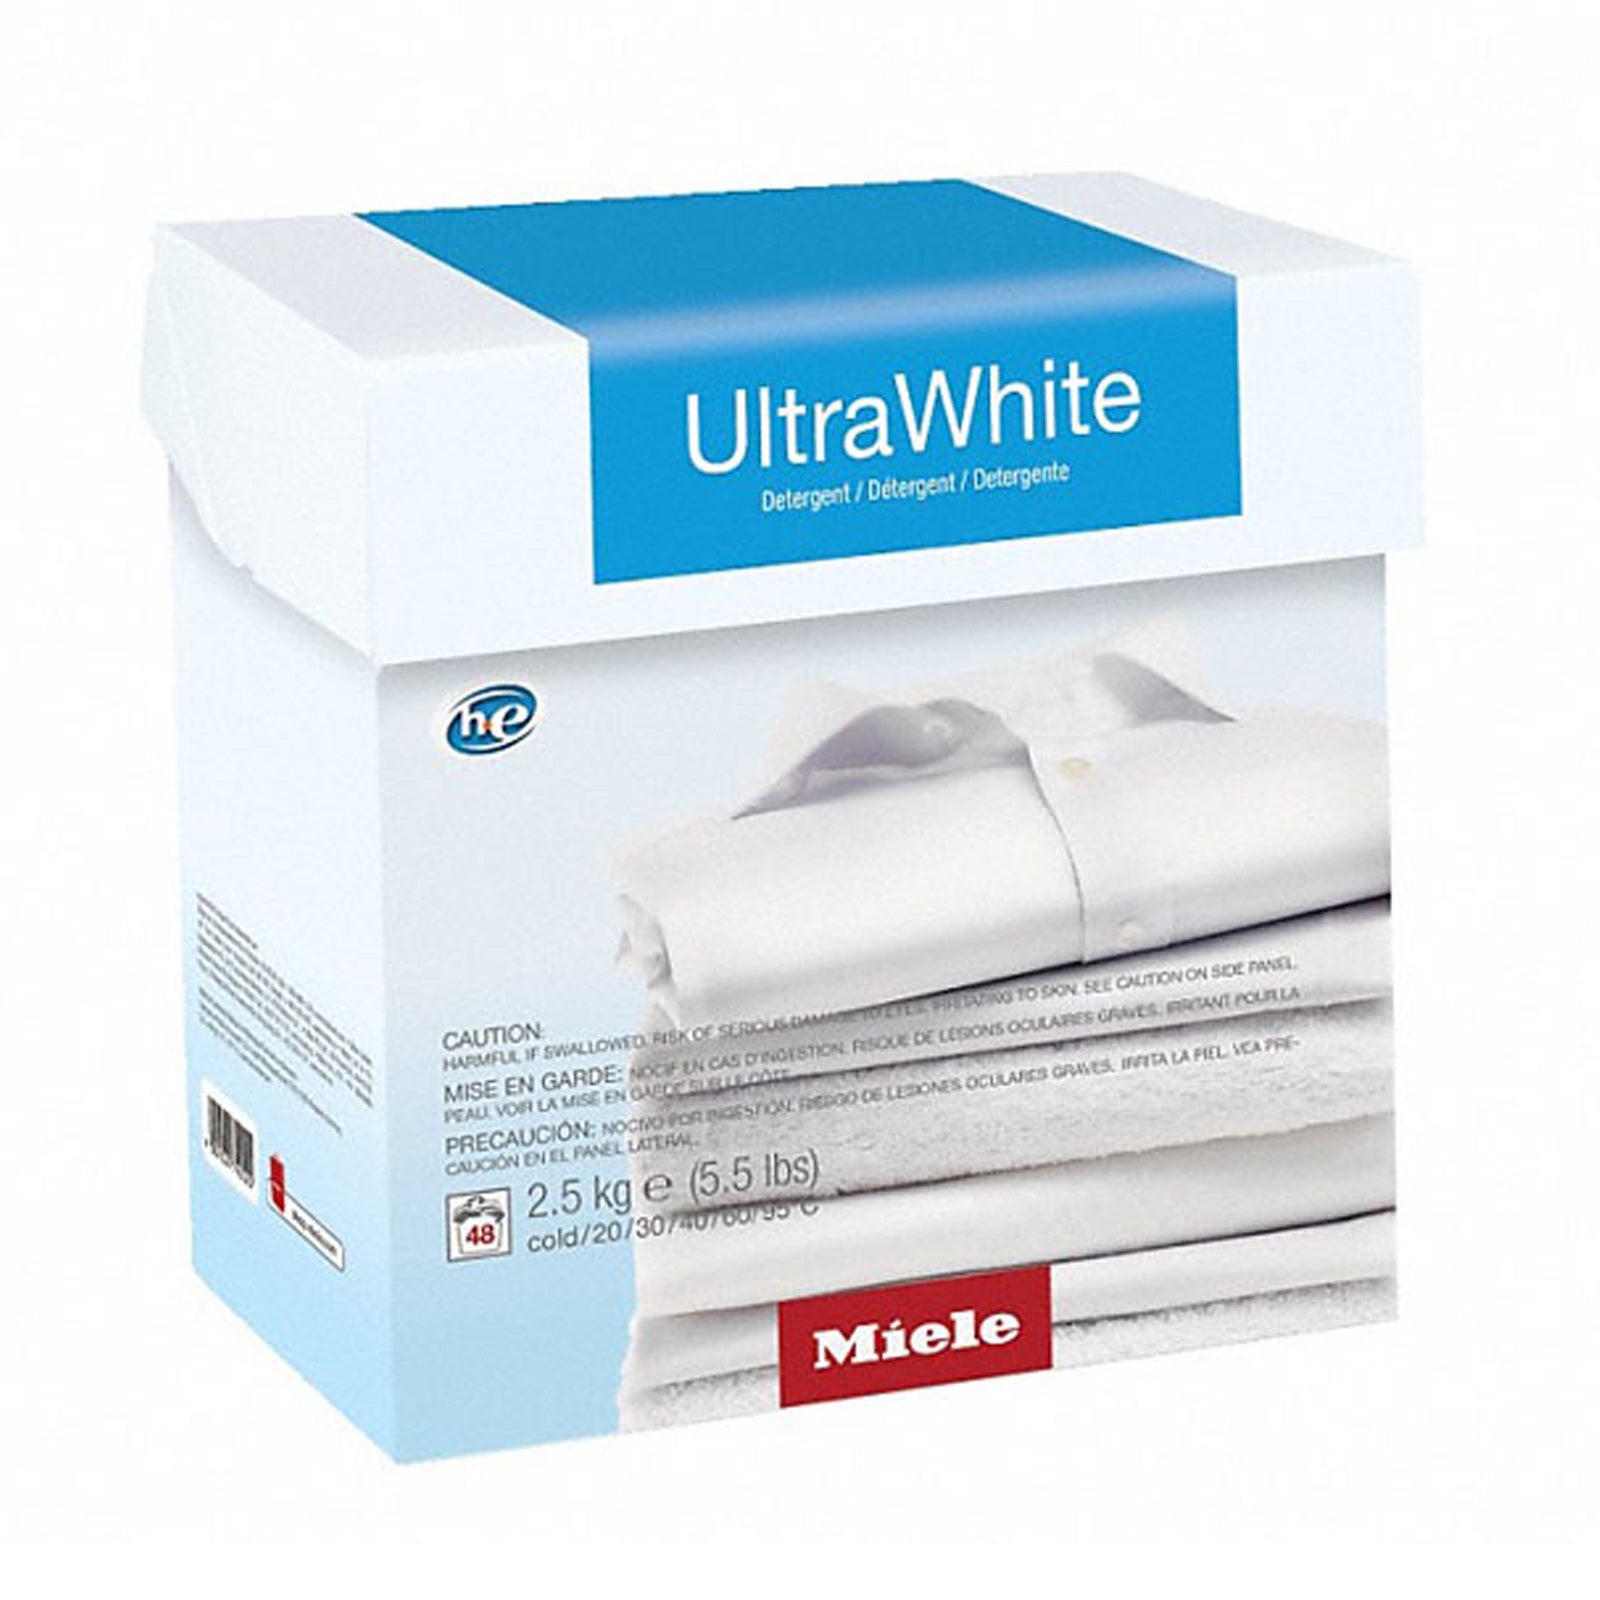 Miele UltraWhite Laundry Detergent Powder 2.5kg Miele Vacuum Plus Canada